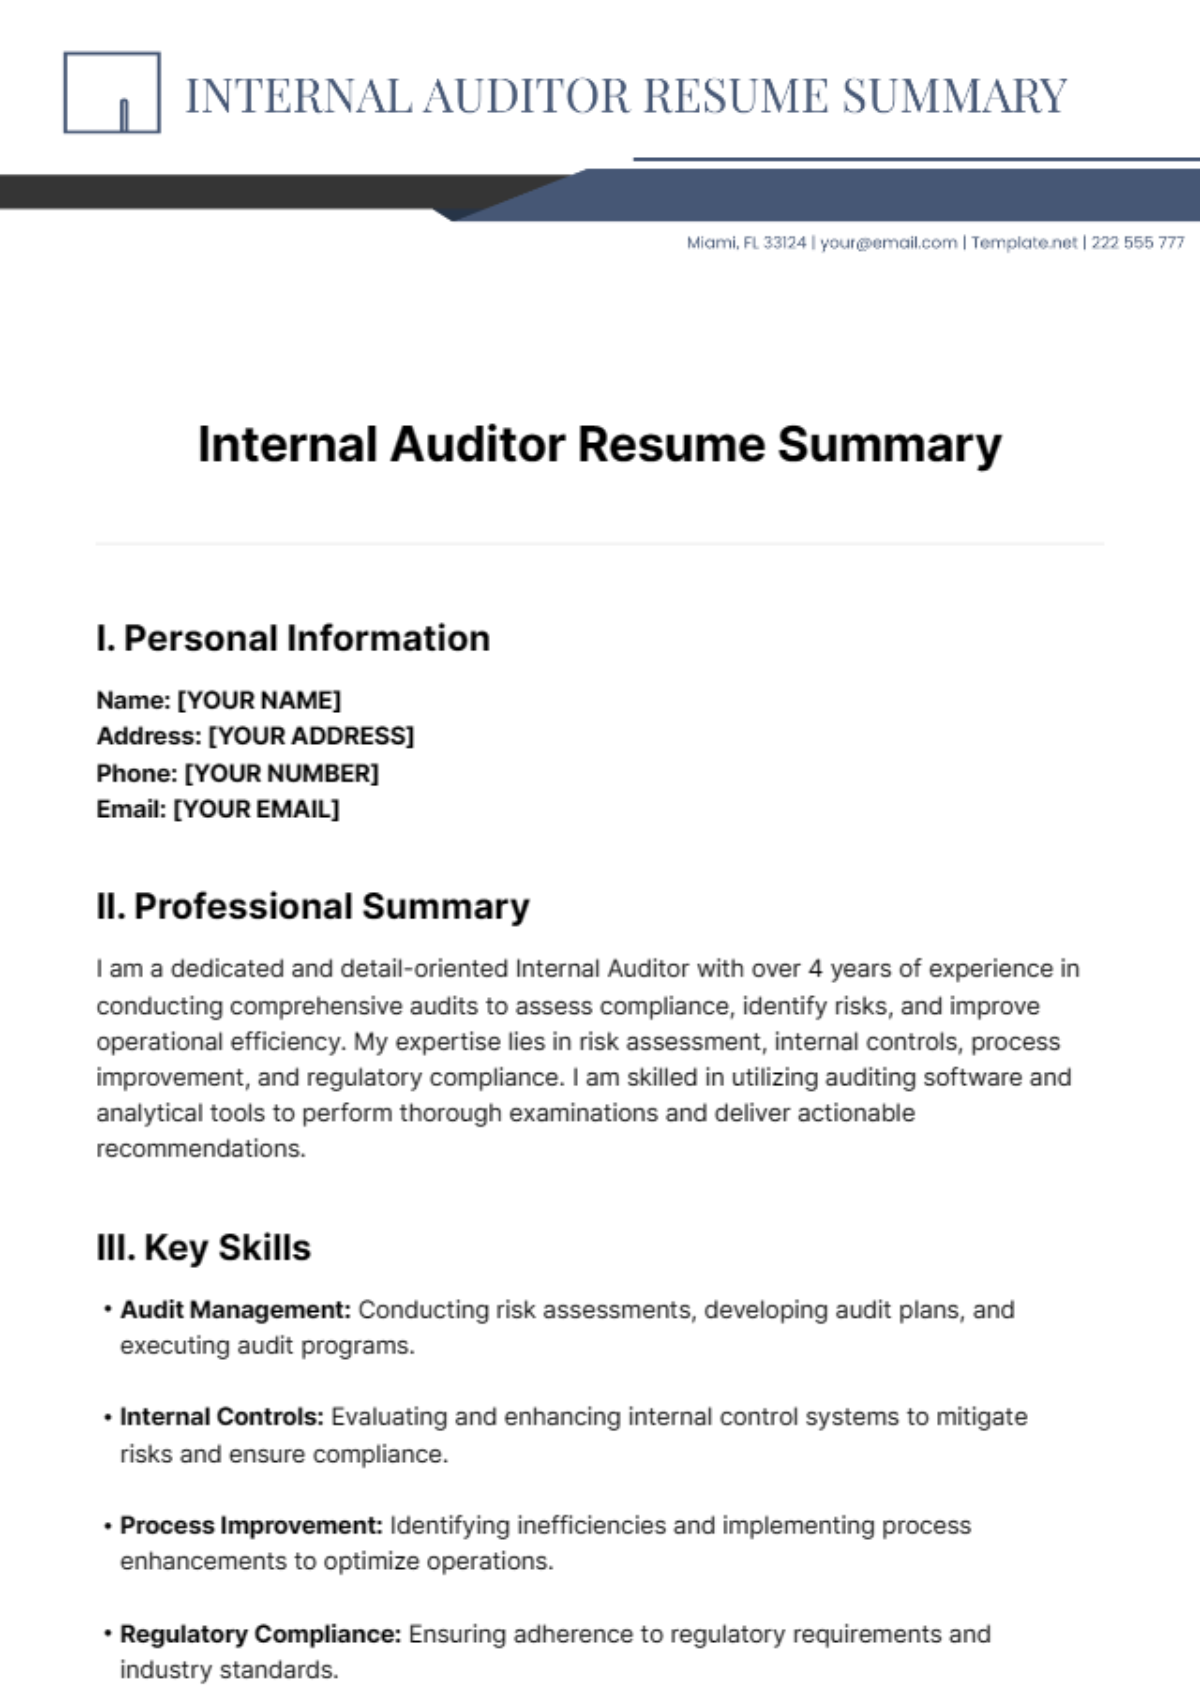 Internal Auditor Resume Summary Template